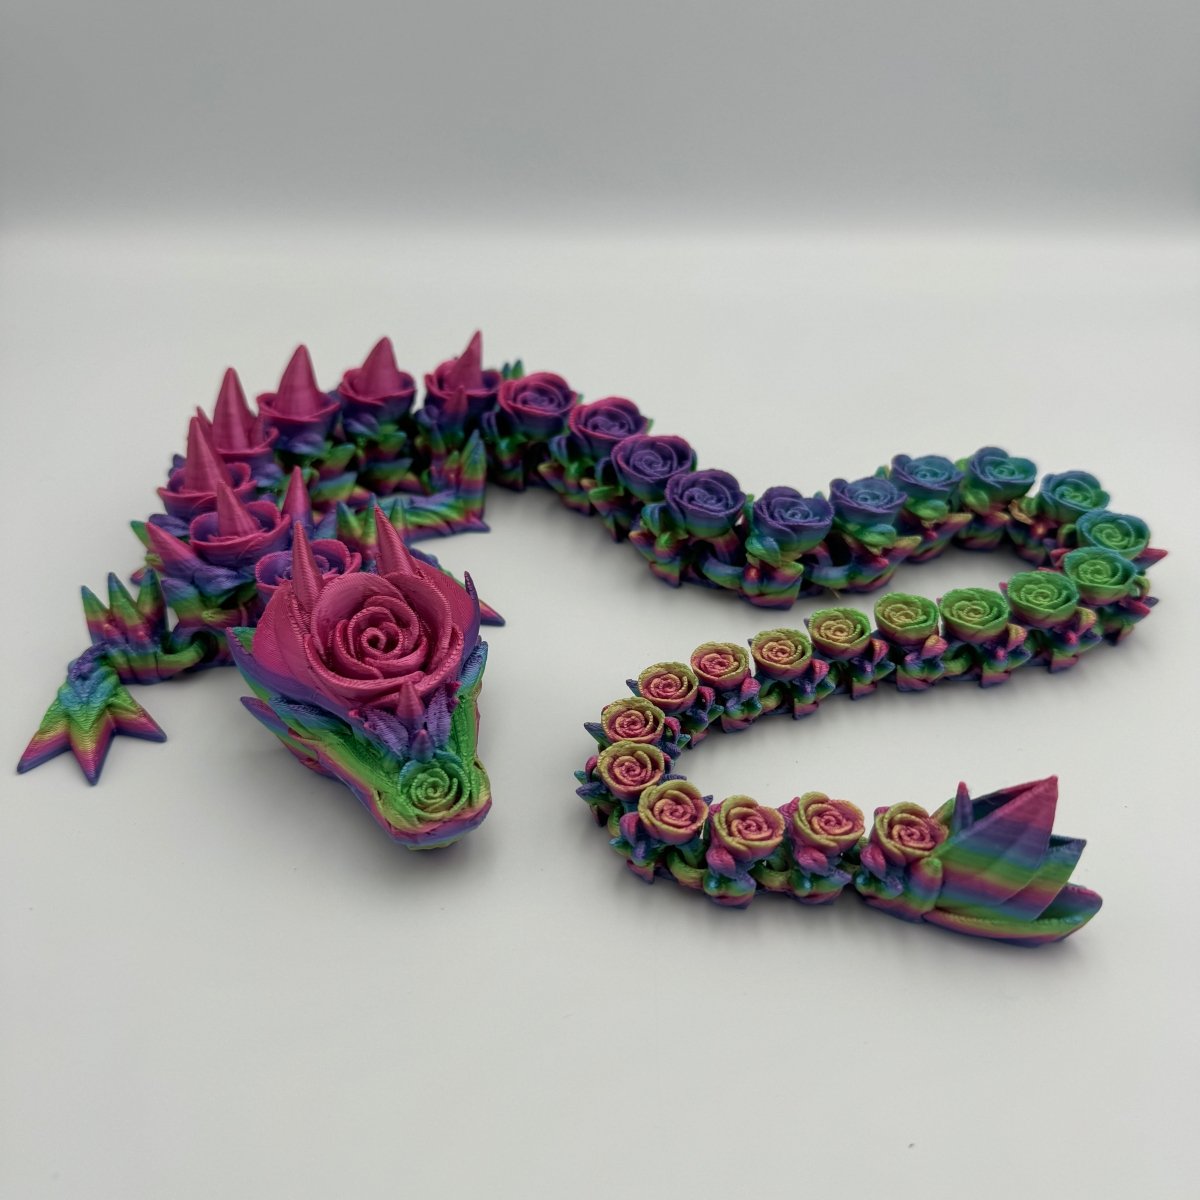 Rose Dragon: Exquisite 22" 3D Printed Flexible Rose Dragon Sculpture - Cosmic Chameleon